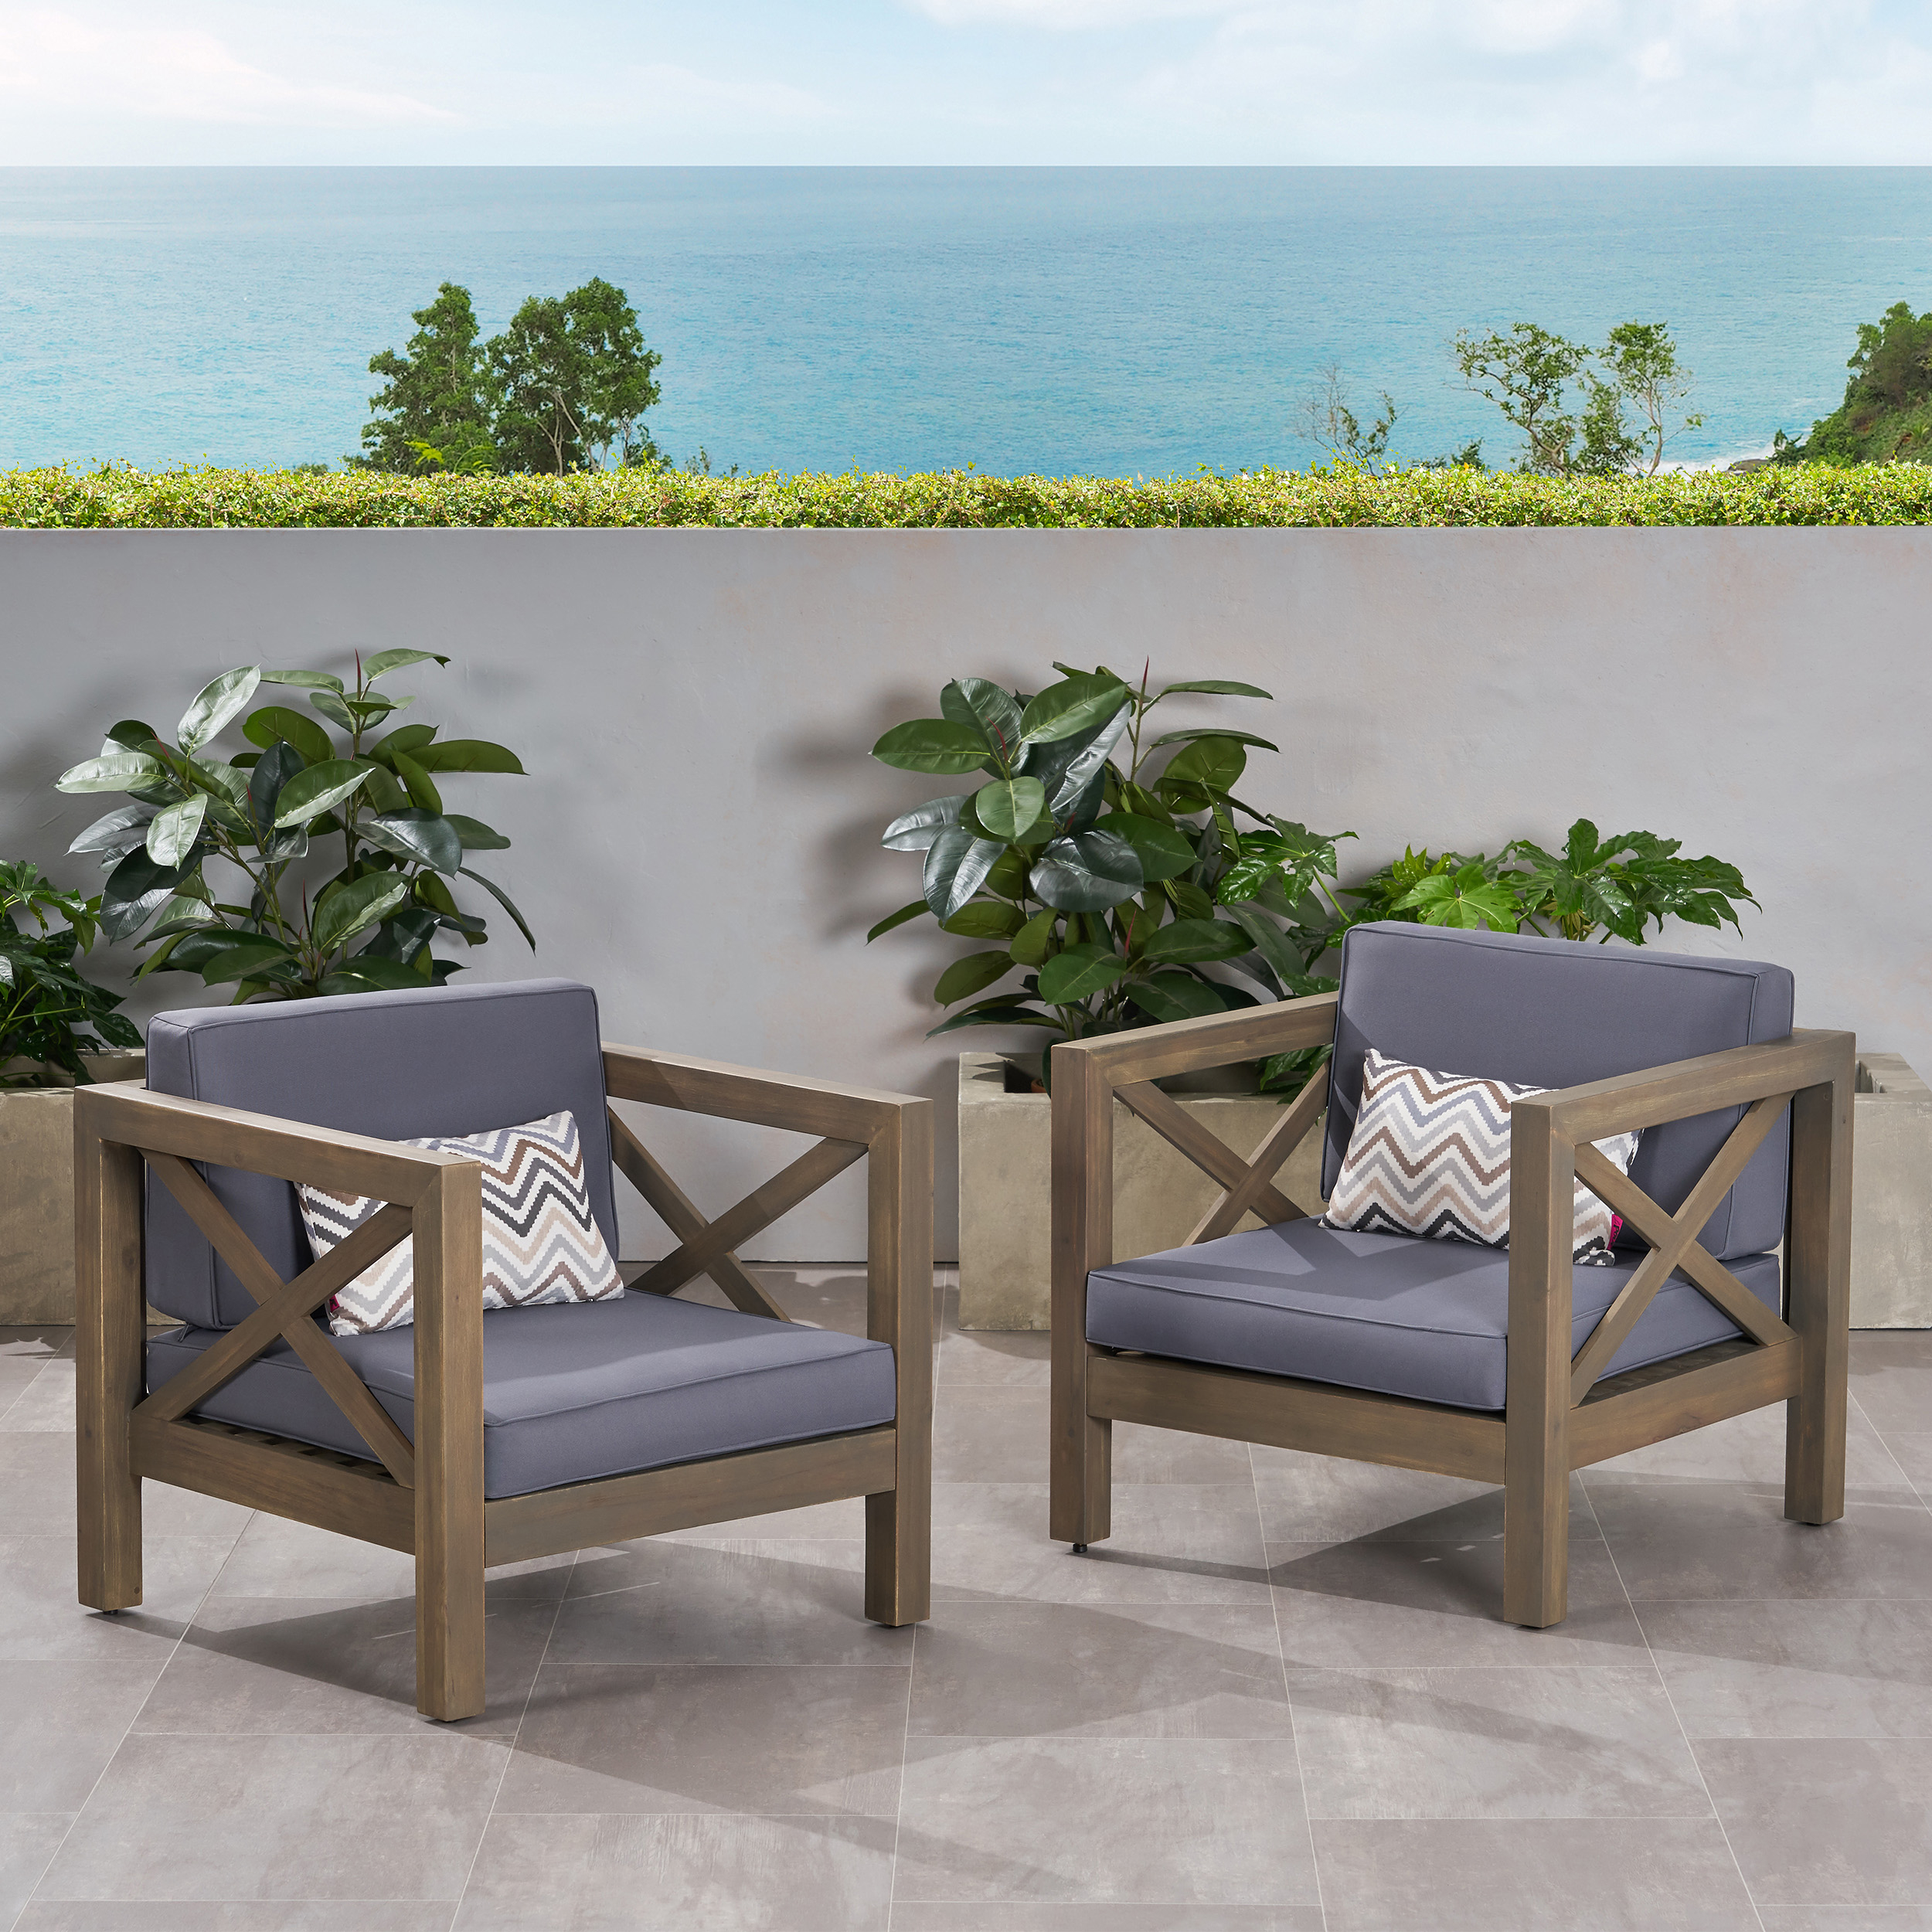 Indira Outdoor Acacia Wood Club Chairs With Cushions (Set Of 2) - Gray + Dark Gray